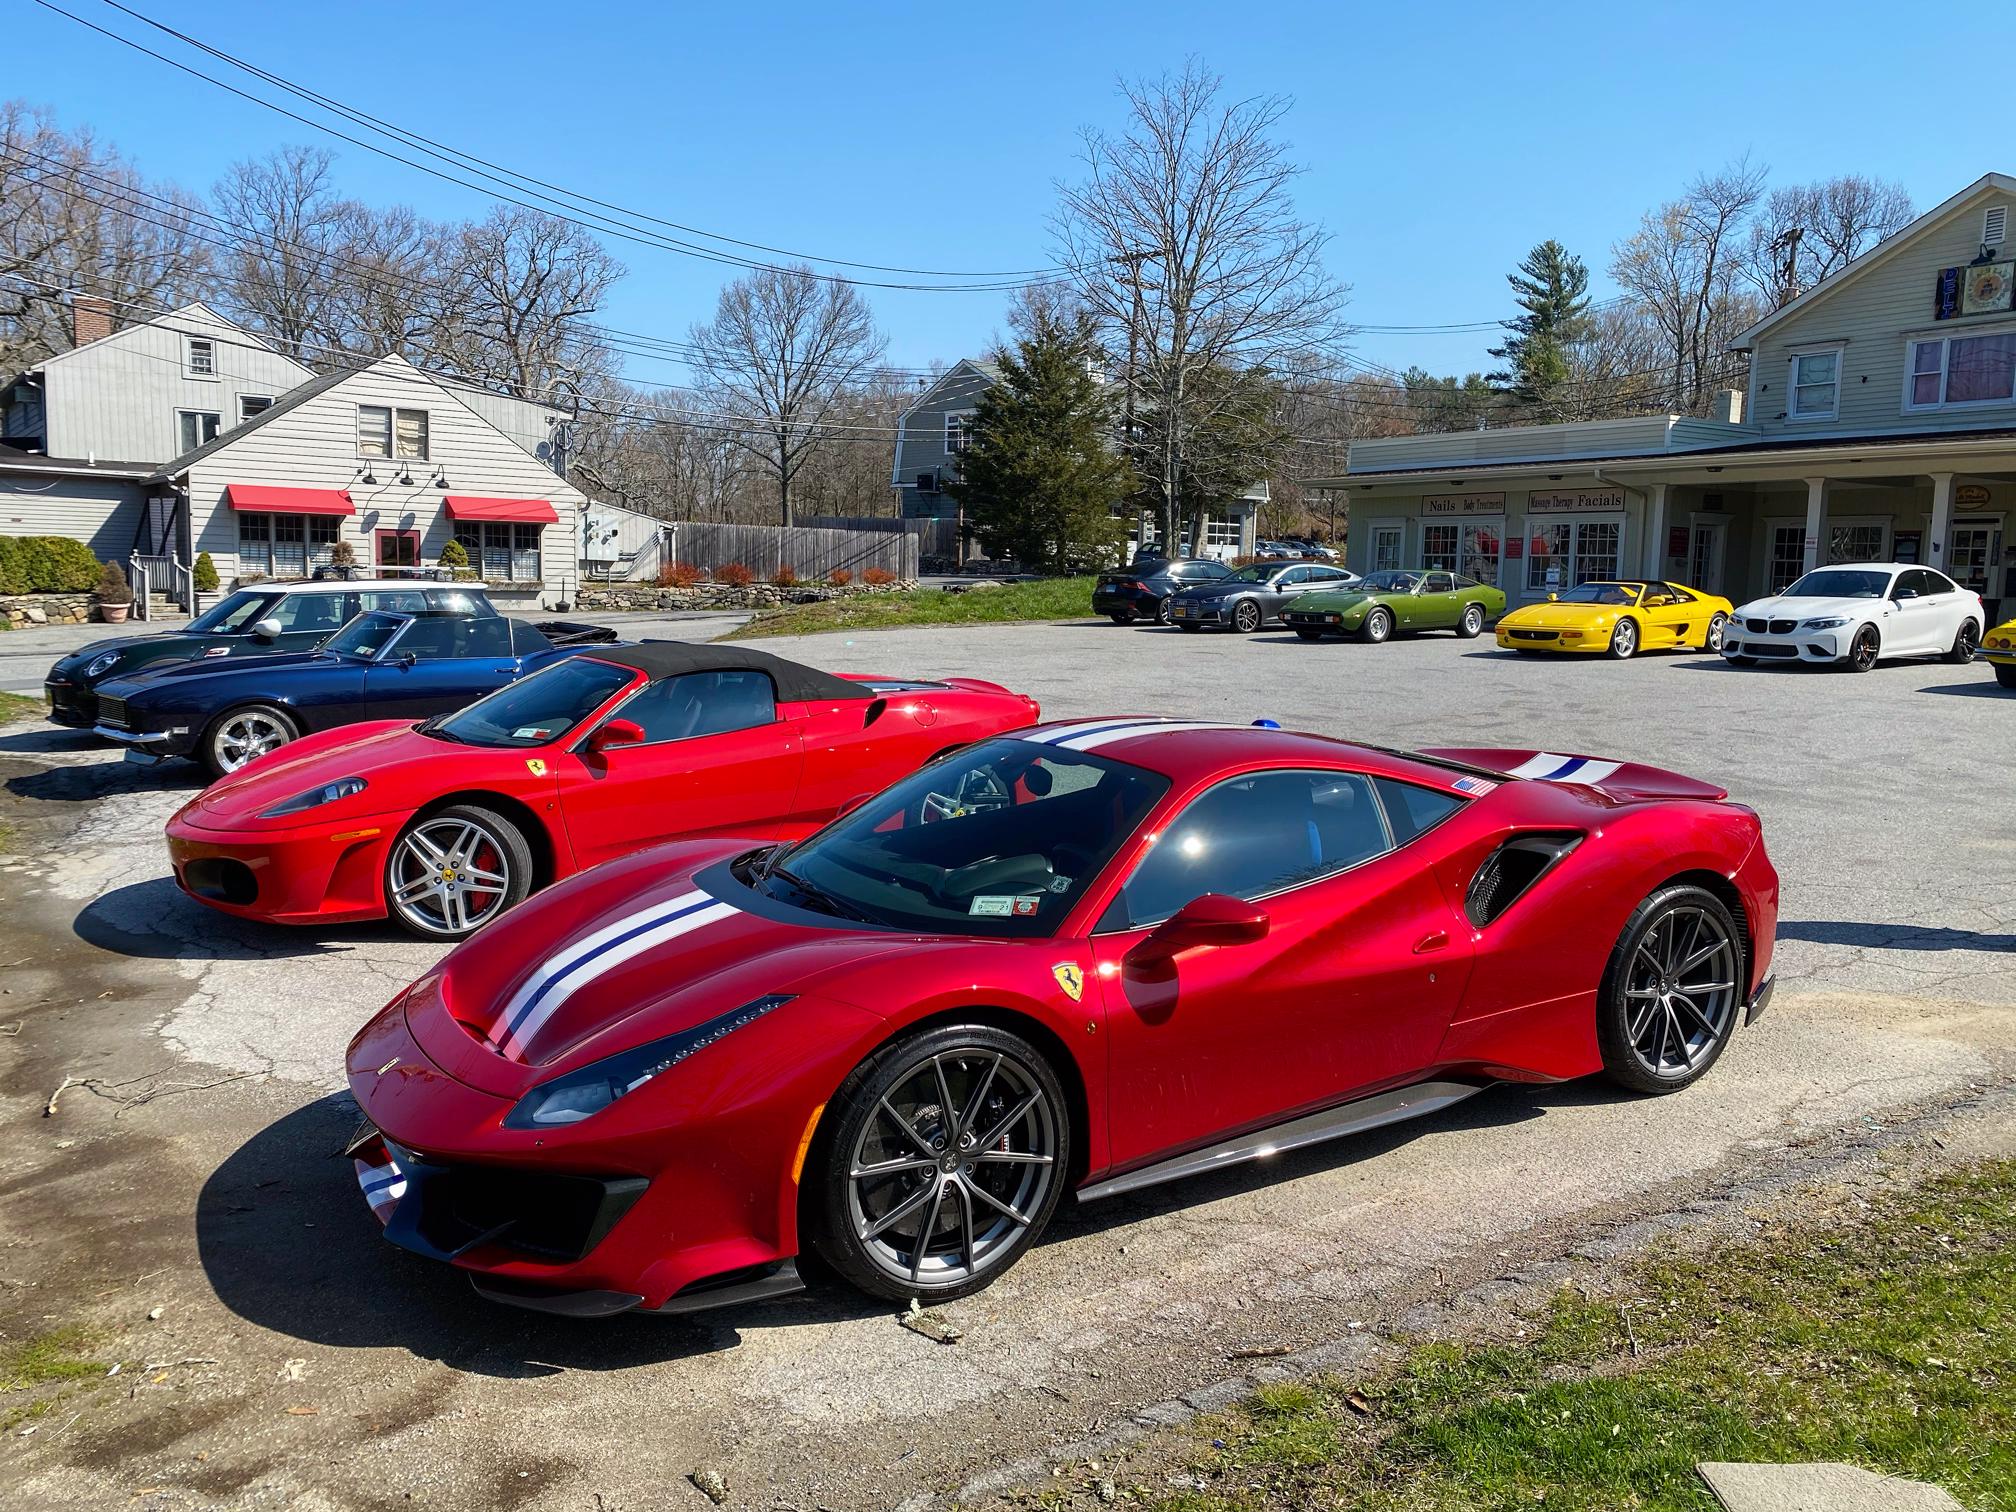 præmedicinering Uventet Udrydde 15 Shades Of Ferrari Red | ROSSOautomobili